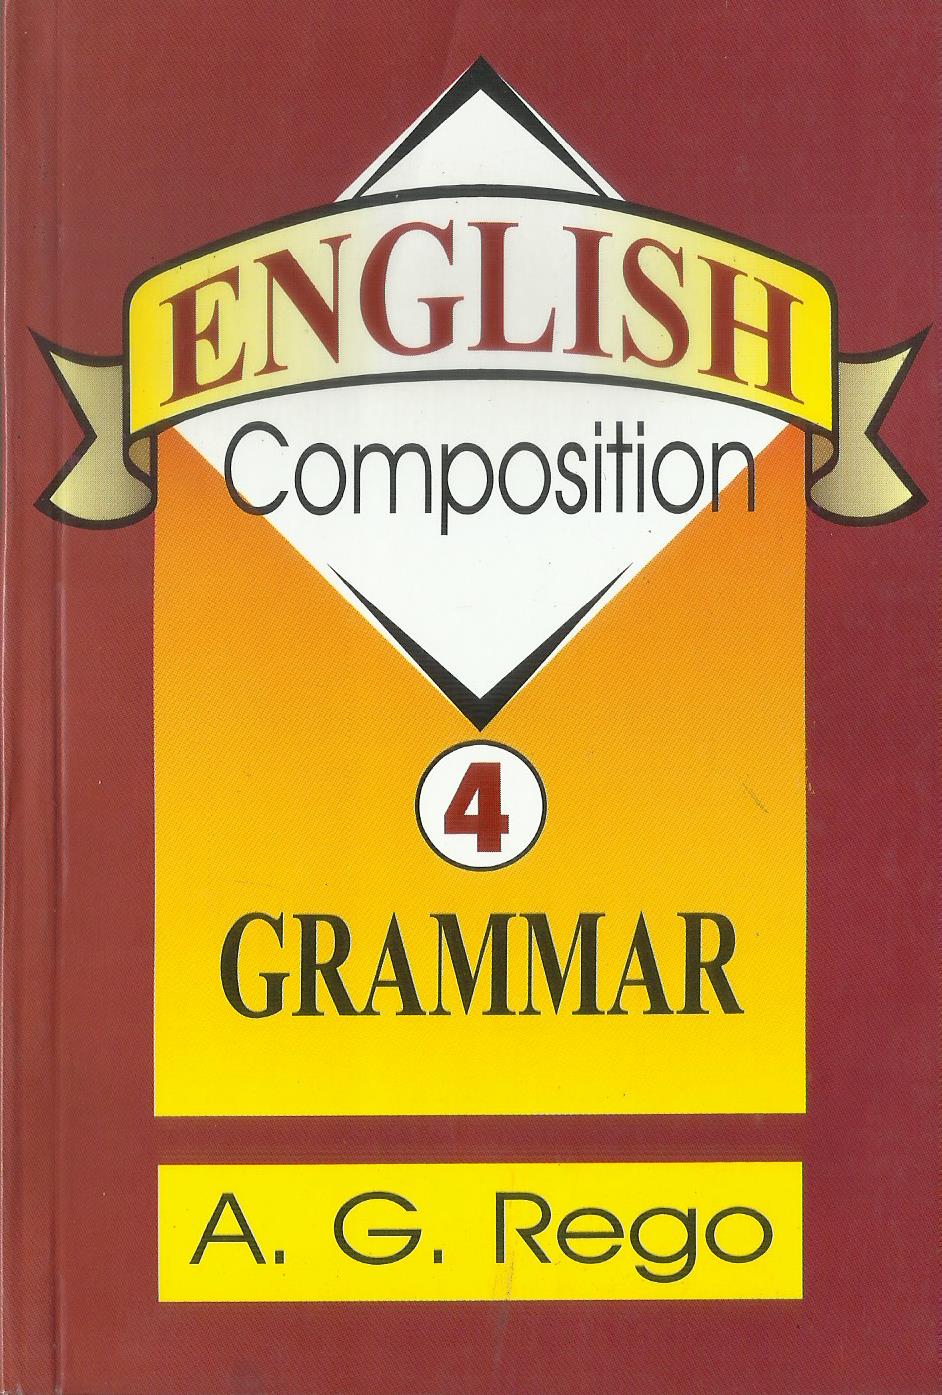 ENGLISH COMPOSITION 4 GRAMMAR - sophiabuy